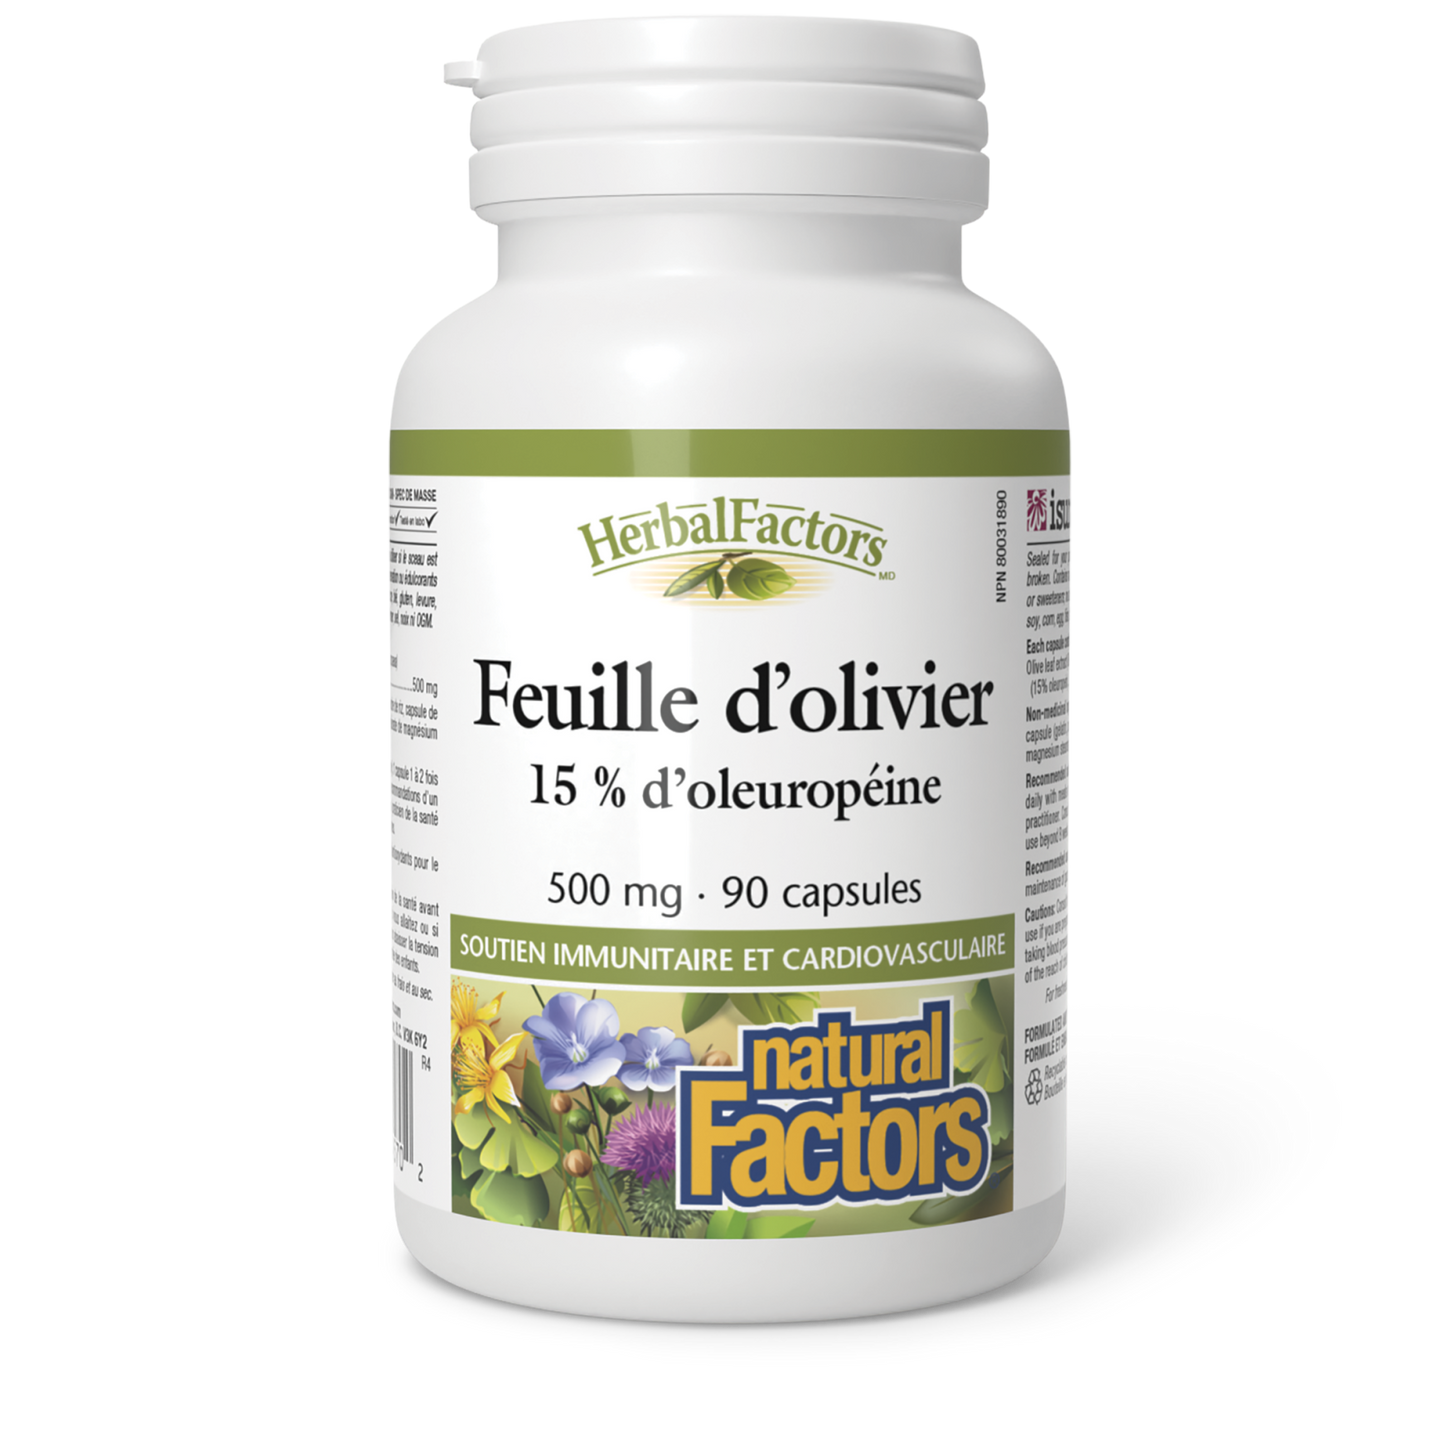 Feuille d’olivier 500 mg, HerbalFactors, Natural Factors|v|image|4570